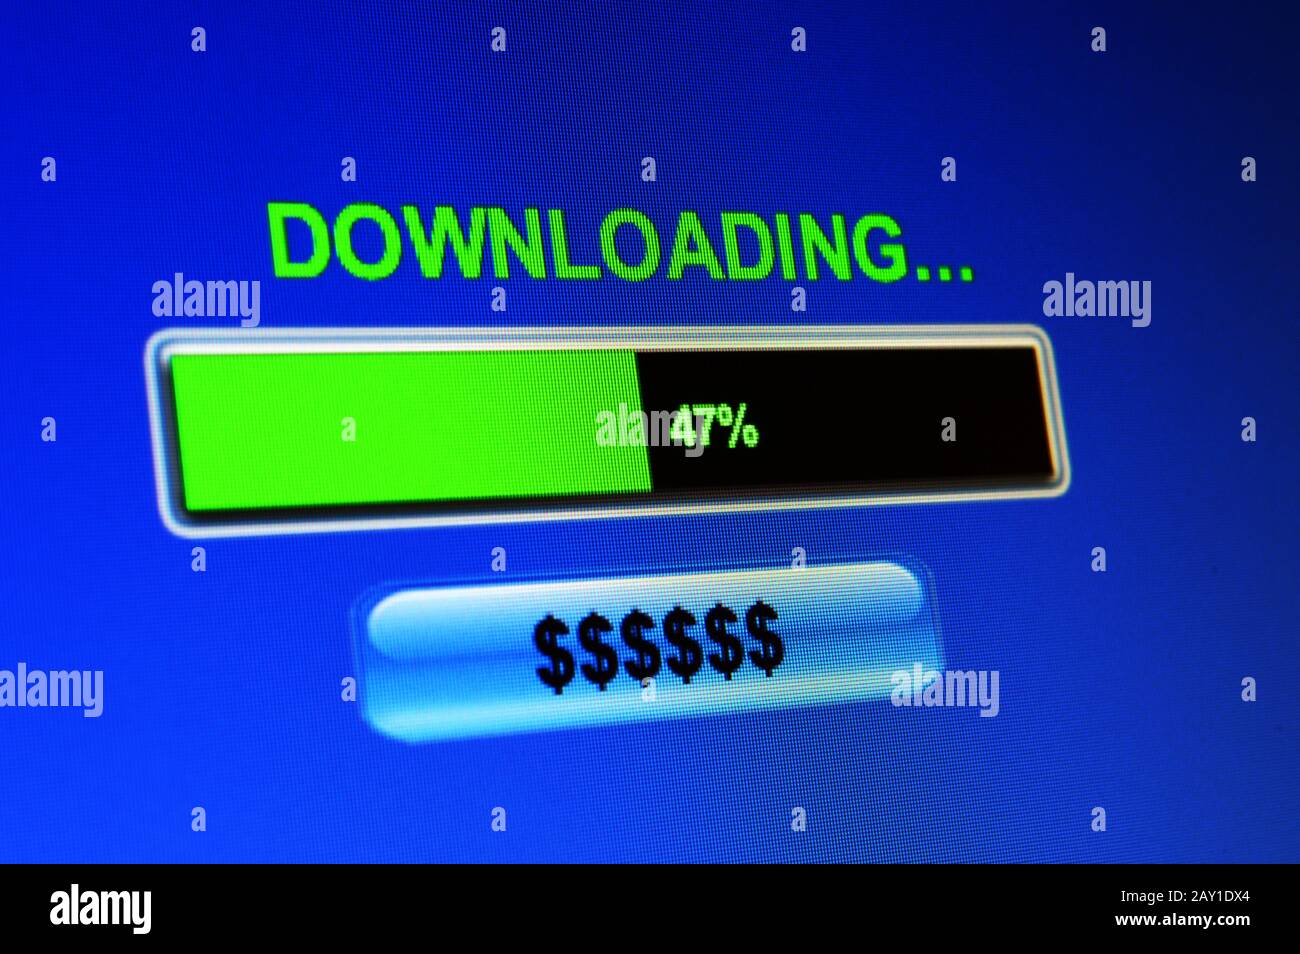 Downloading dollars Stock Photo